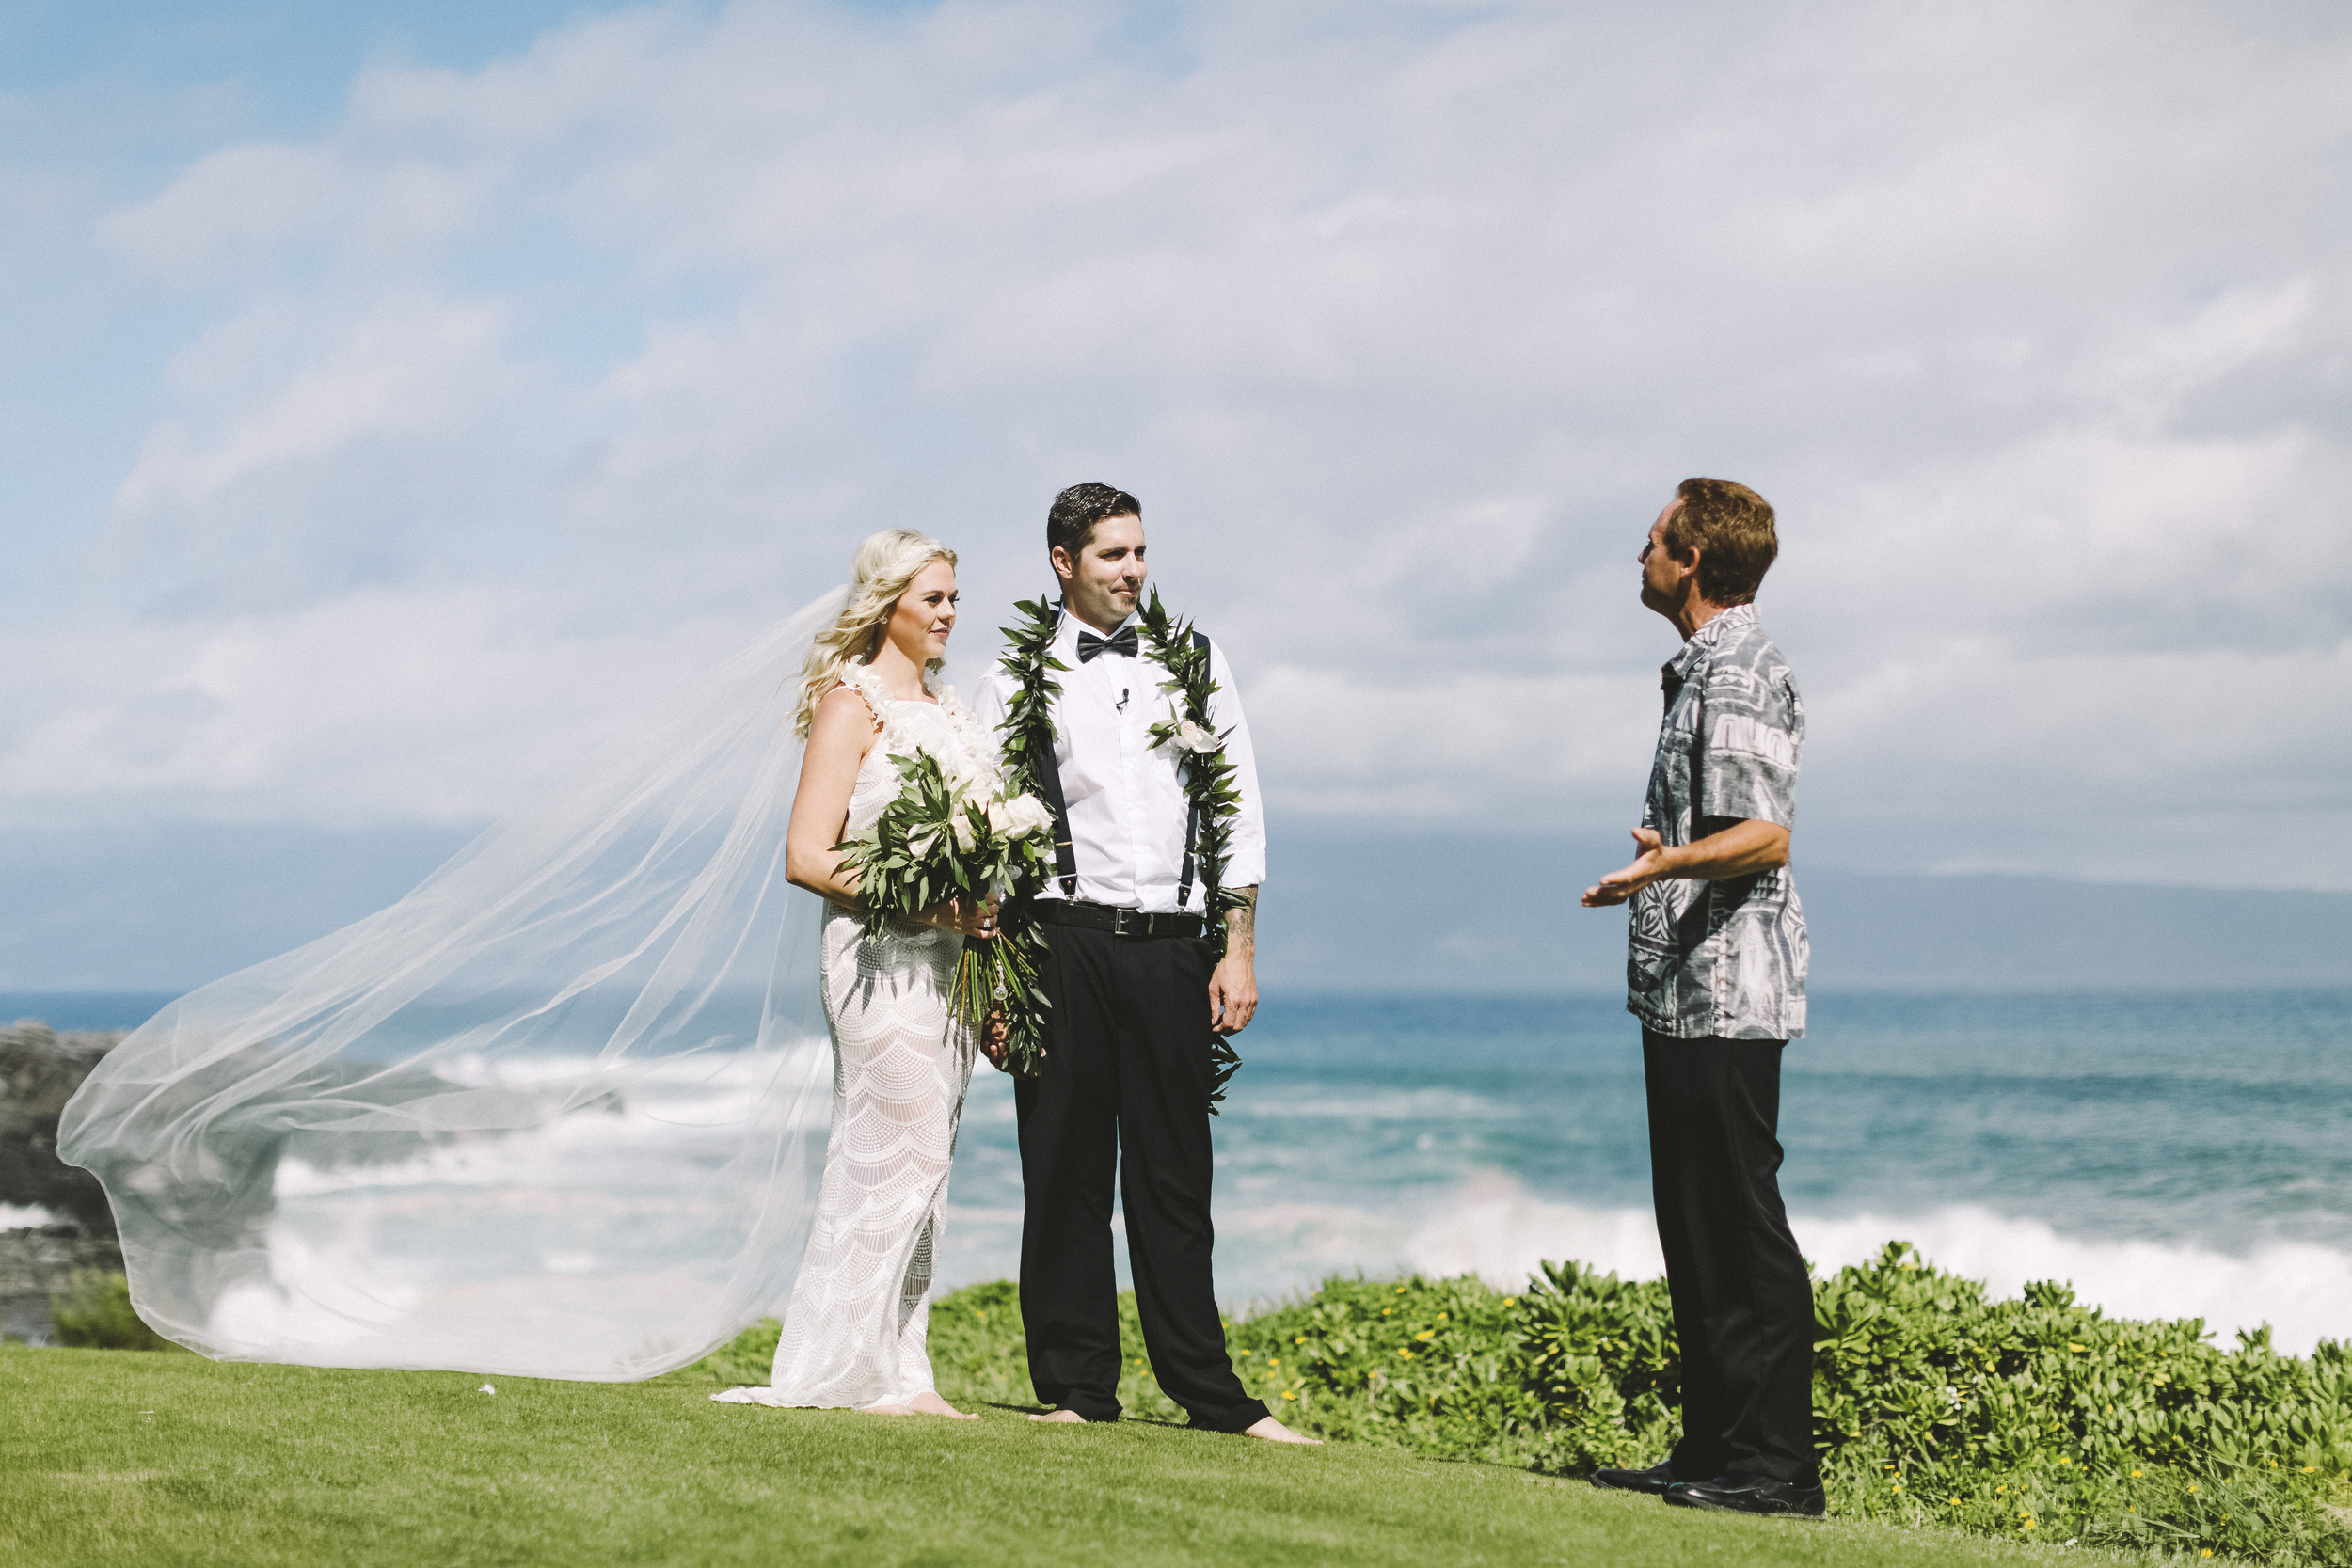 angie-diaz-photography-hawaii-wedding-13.jpg